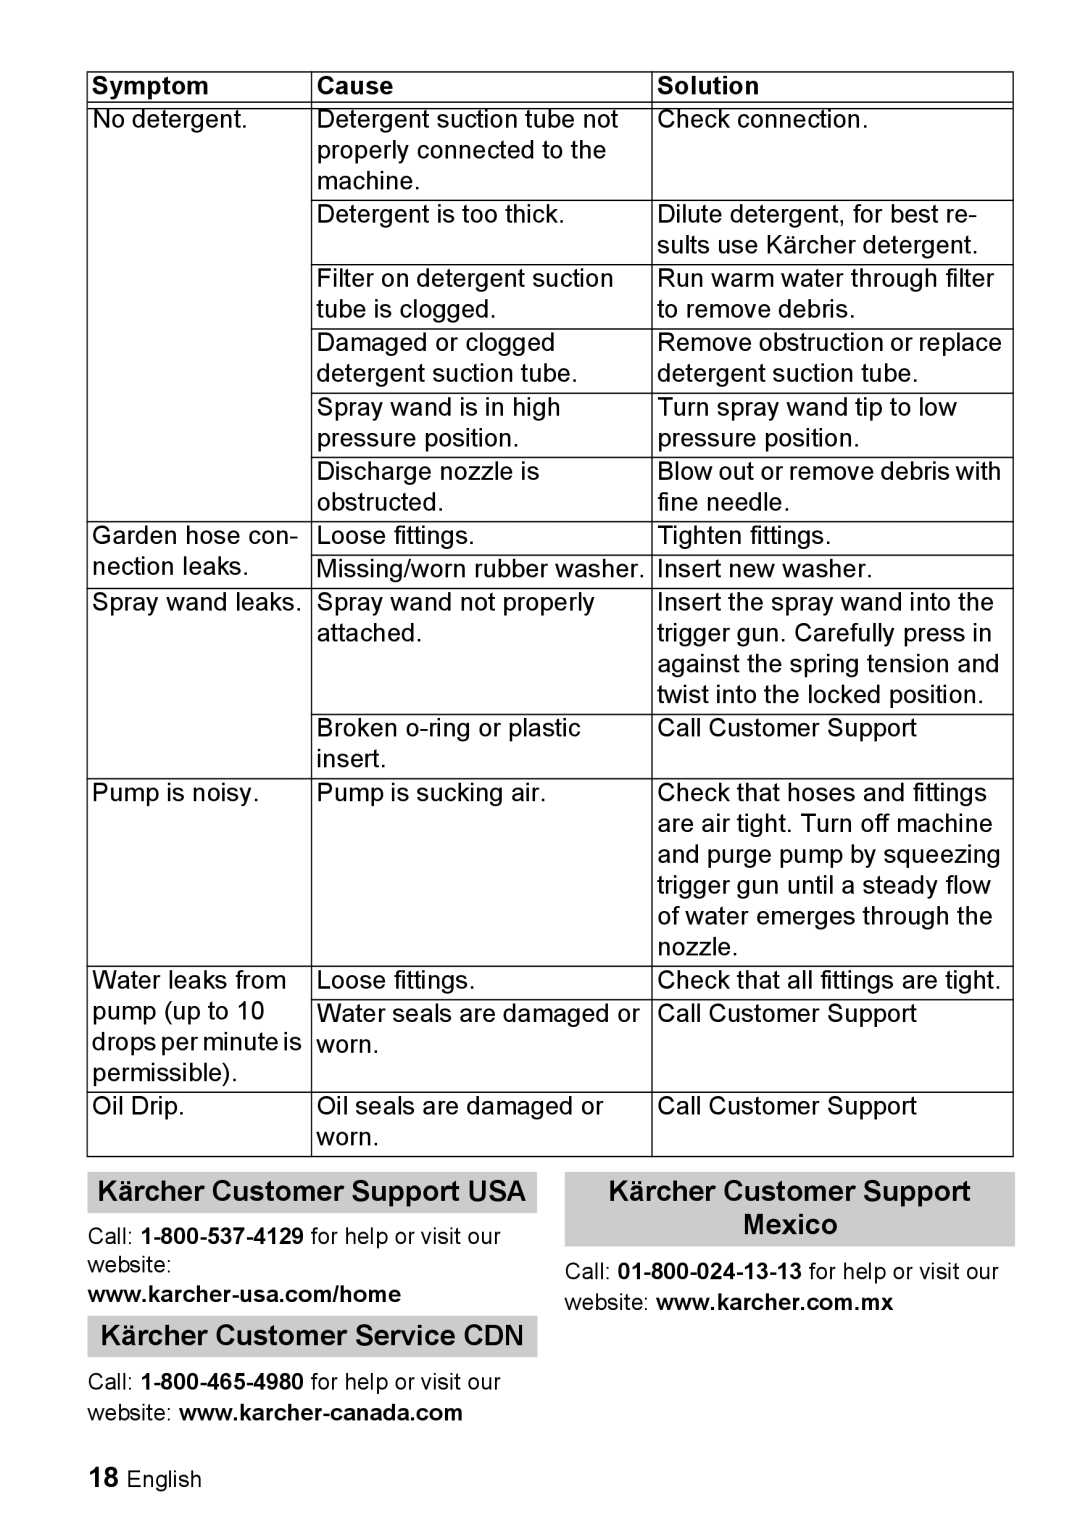 Karcher K 3.68 M manual Symptom, Cause, Solution, Kärcher Customer Support USA, Kärcher Customer Support Mexico 